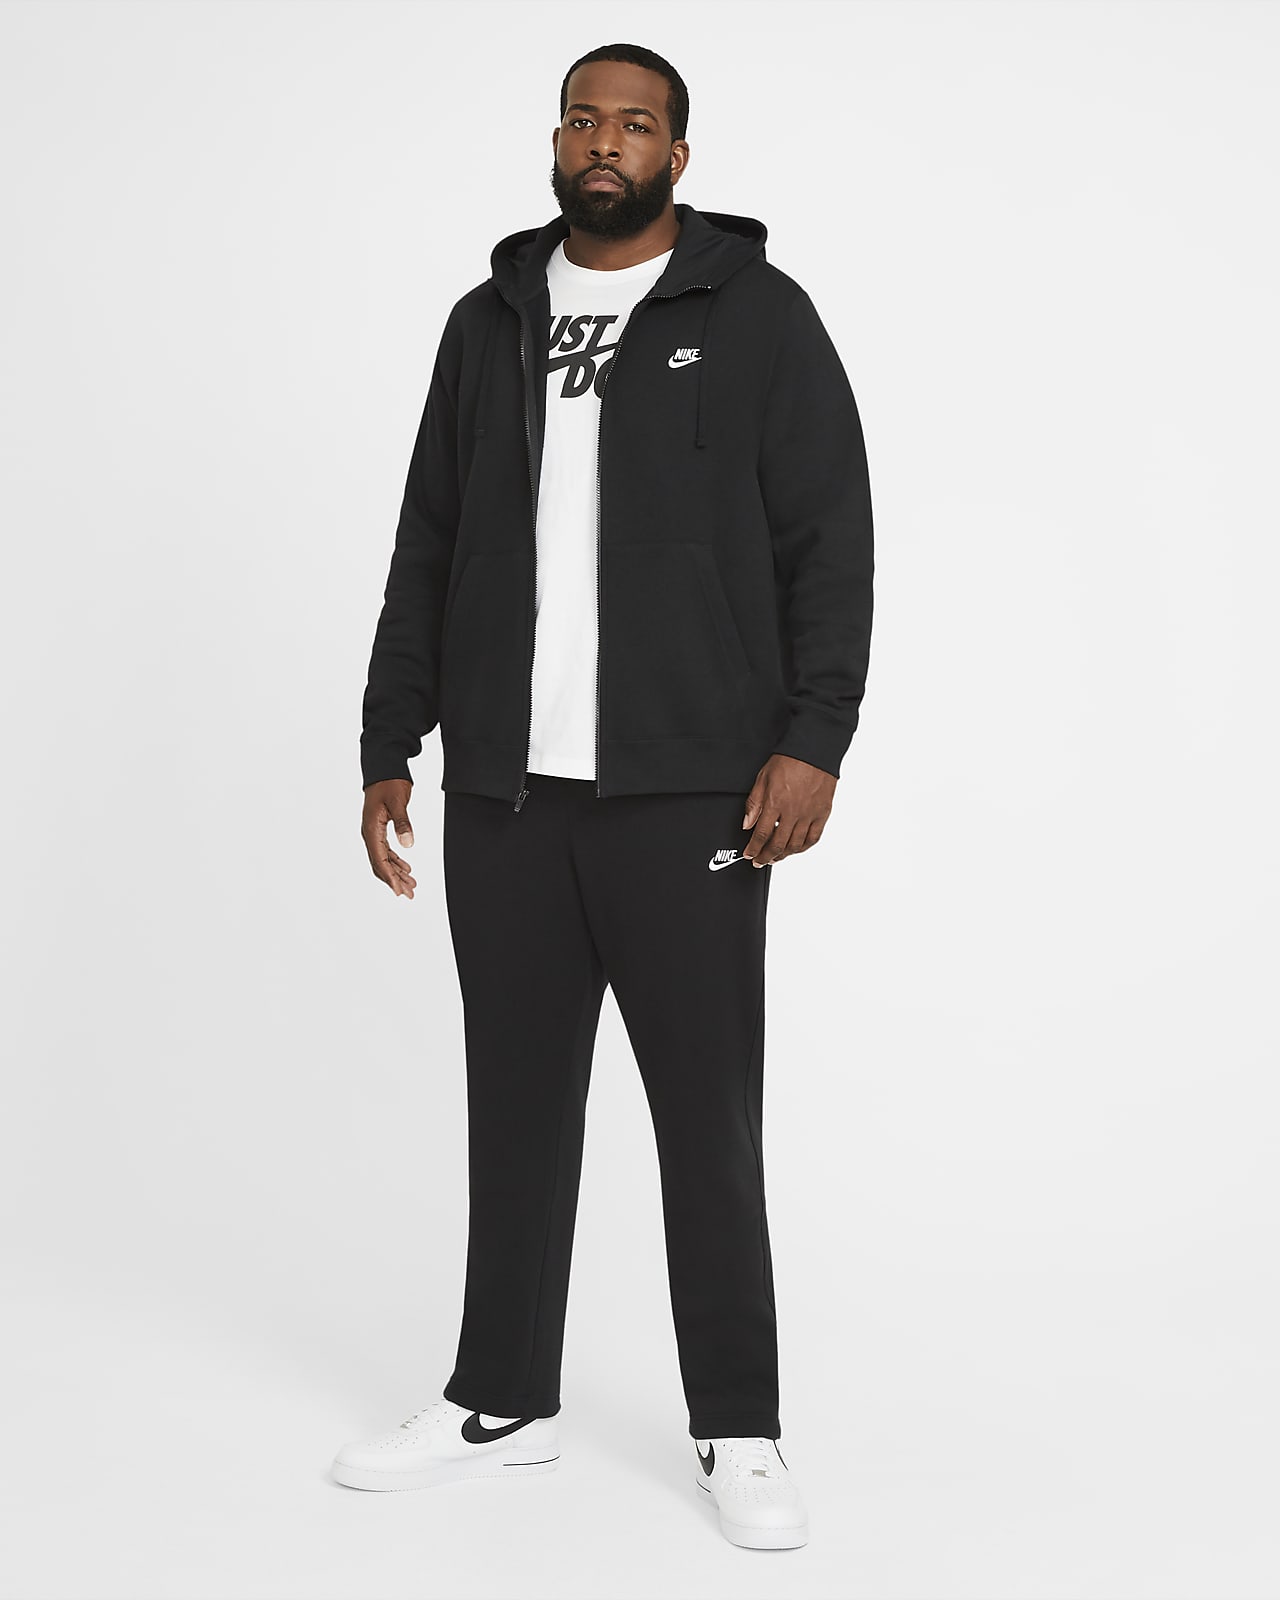  Nike Men's Sportswear Open Hem Club Pants, Black/White